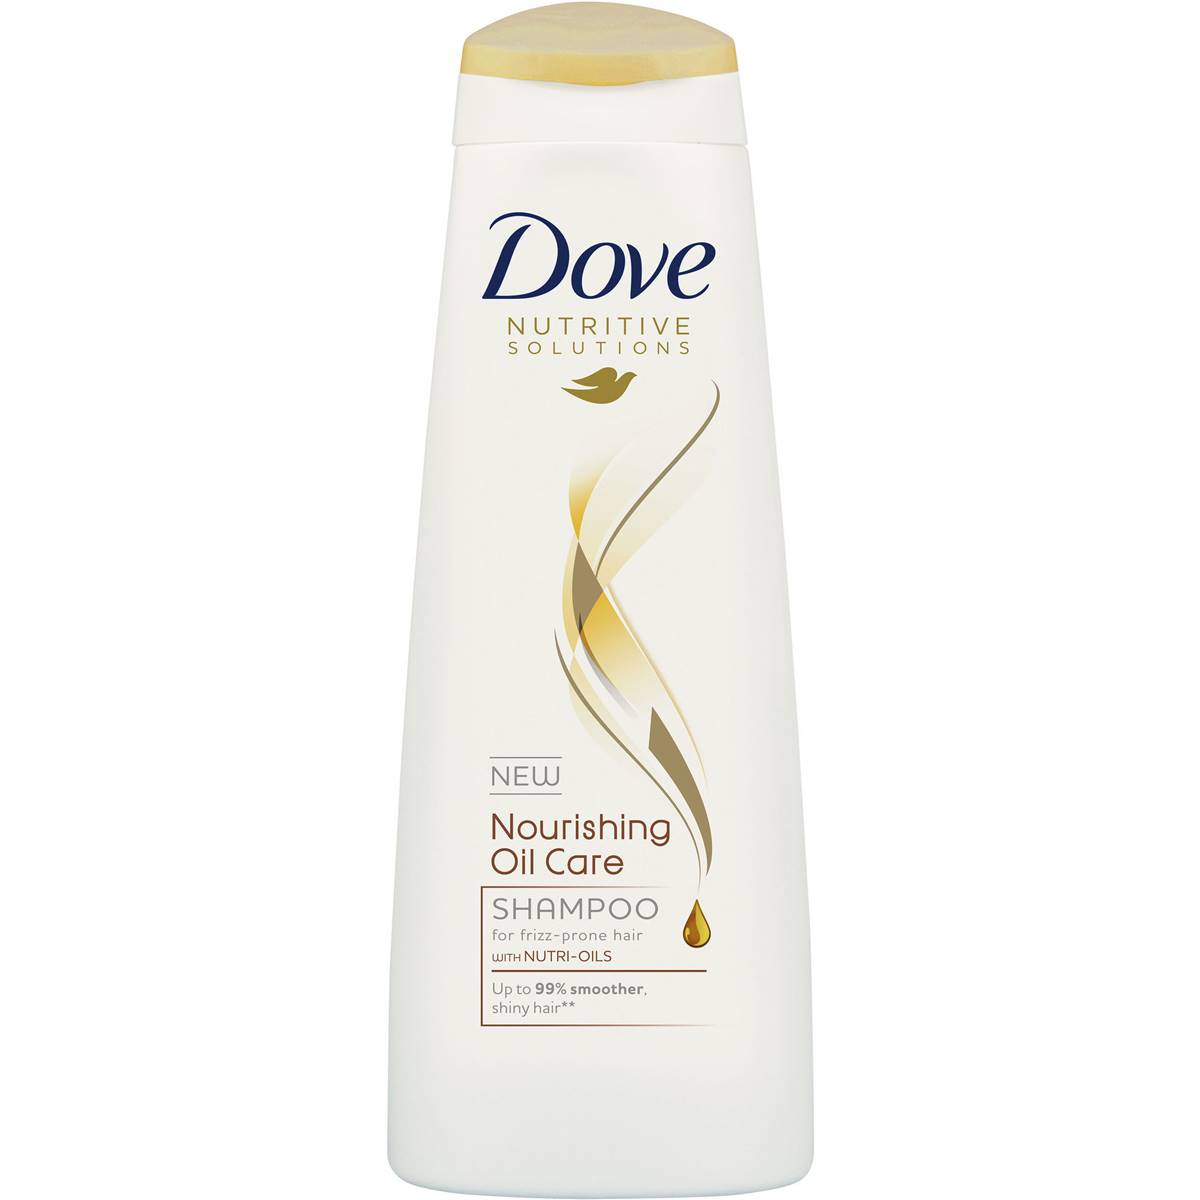 Dove Nutritive Solutions Shampoo Nourishing Oil Care